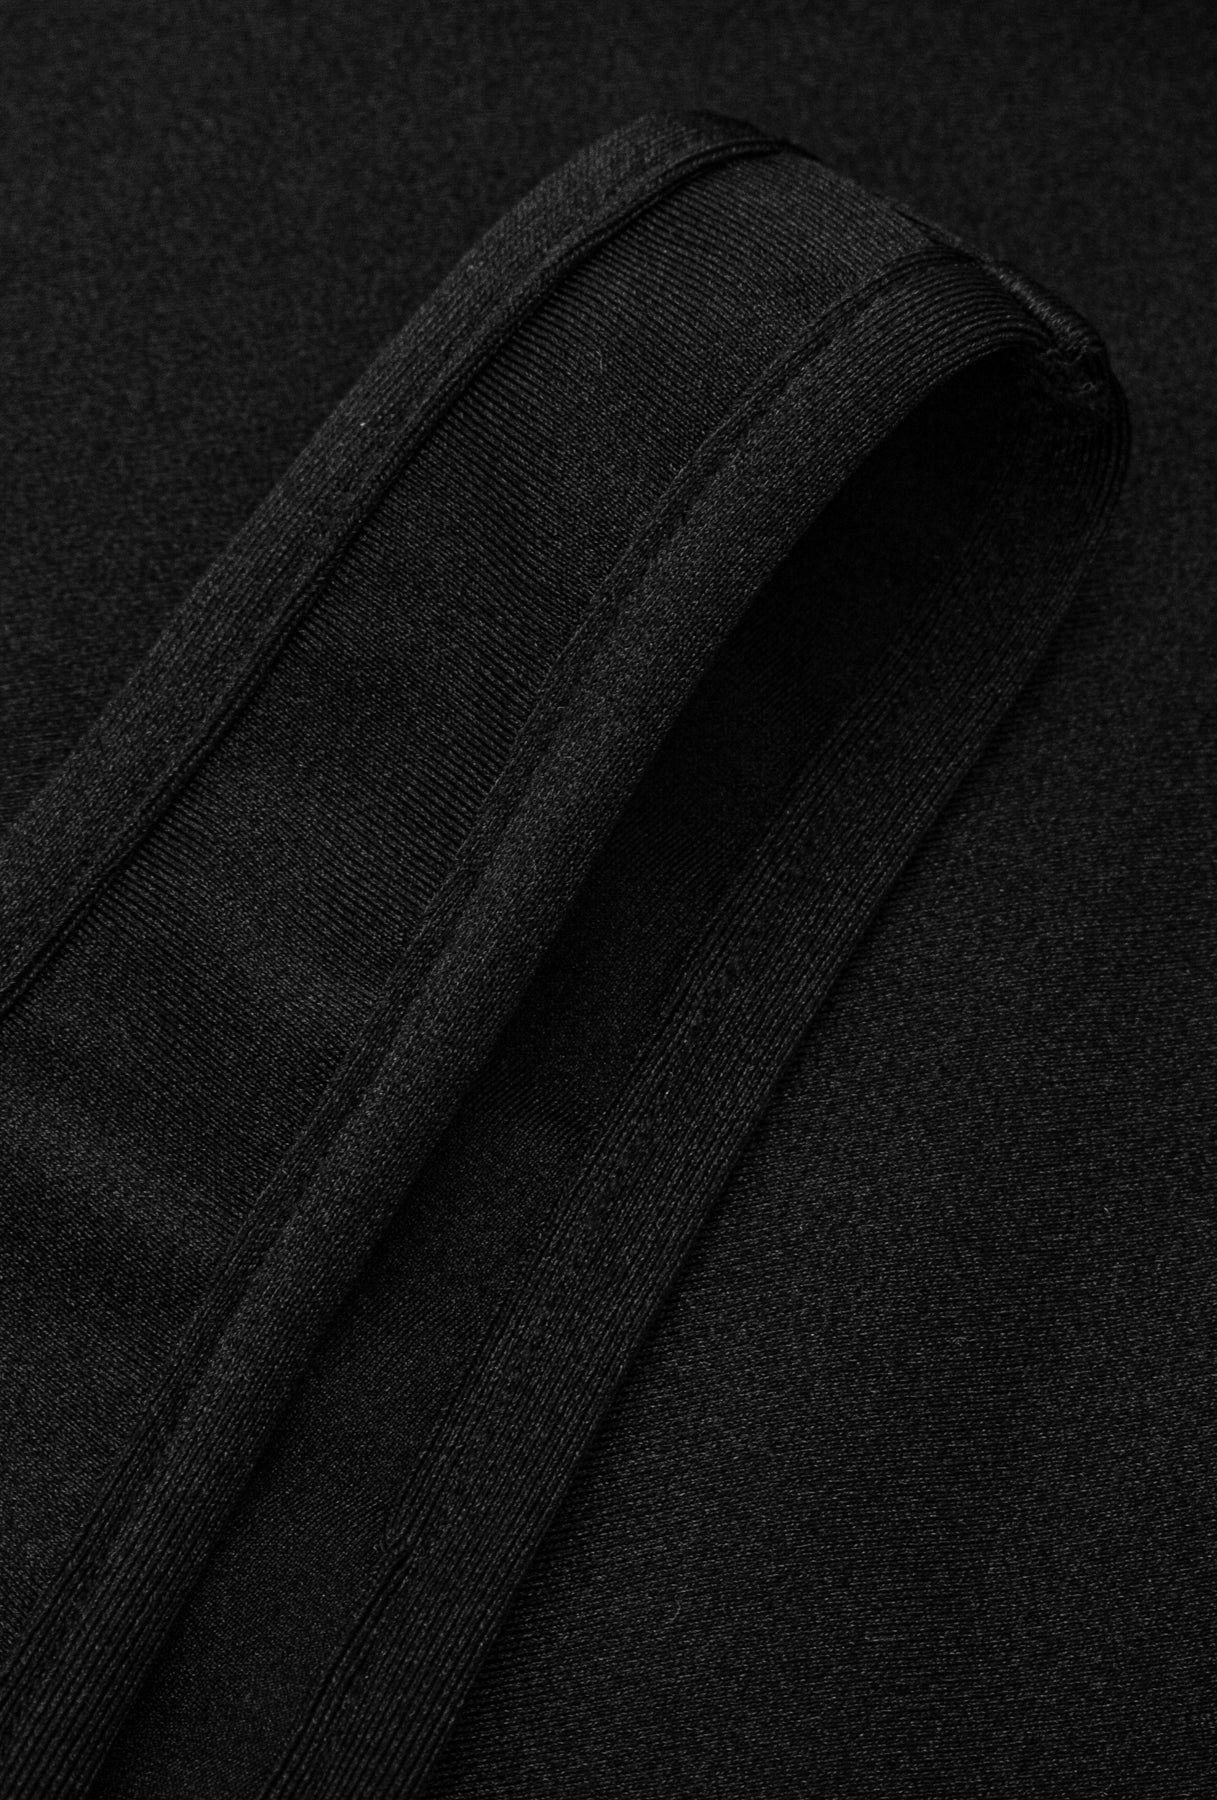 Molten dress black